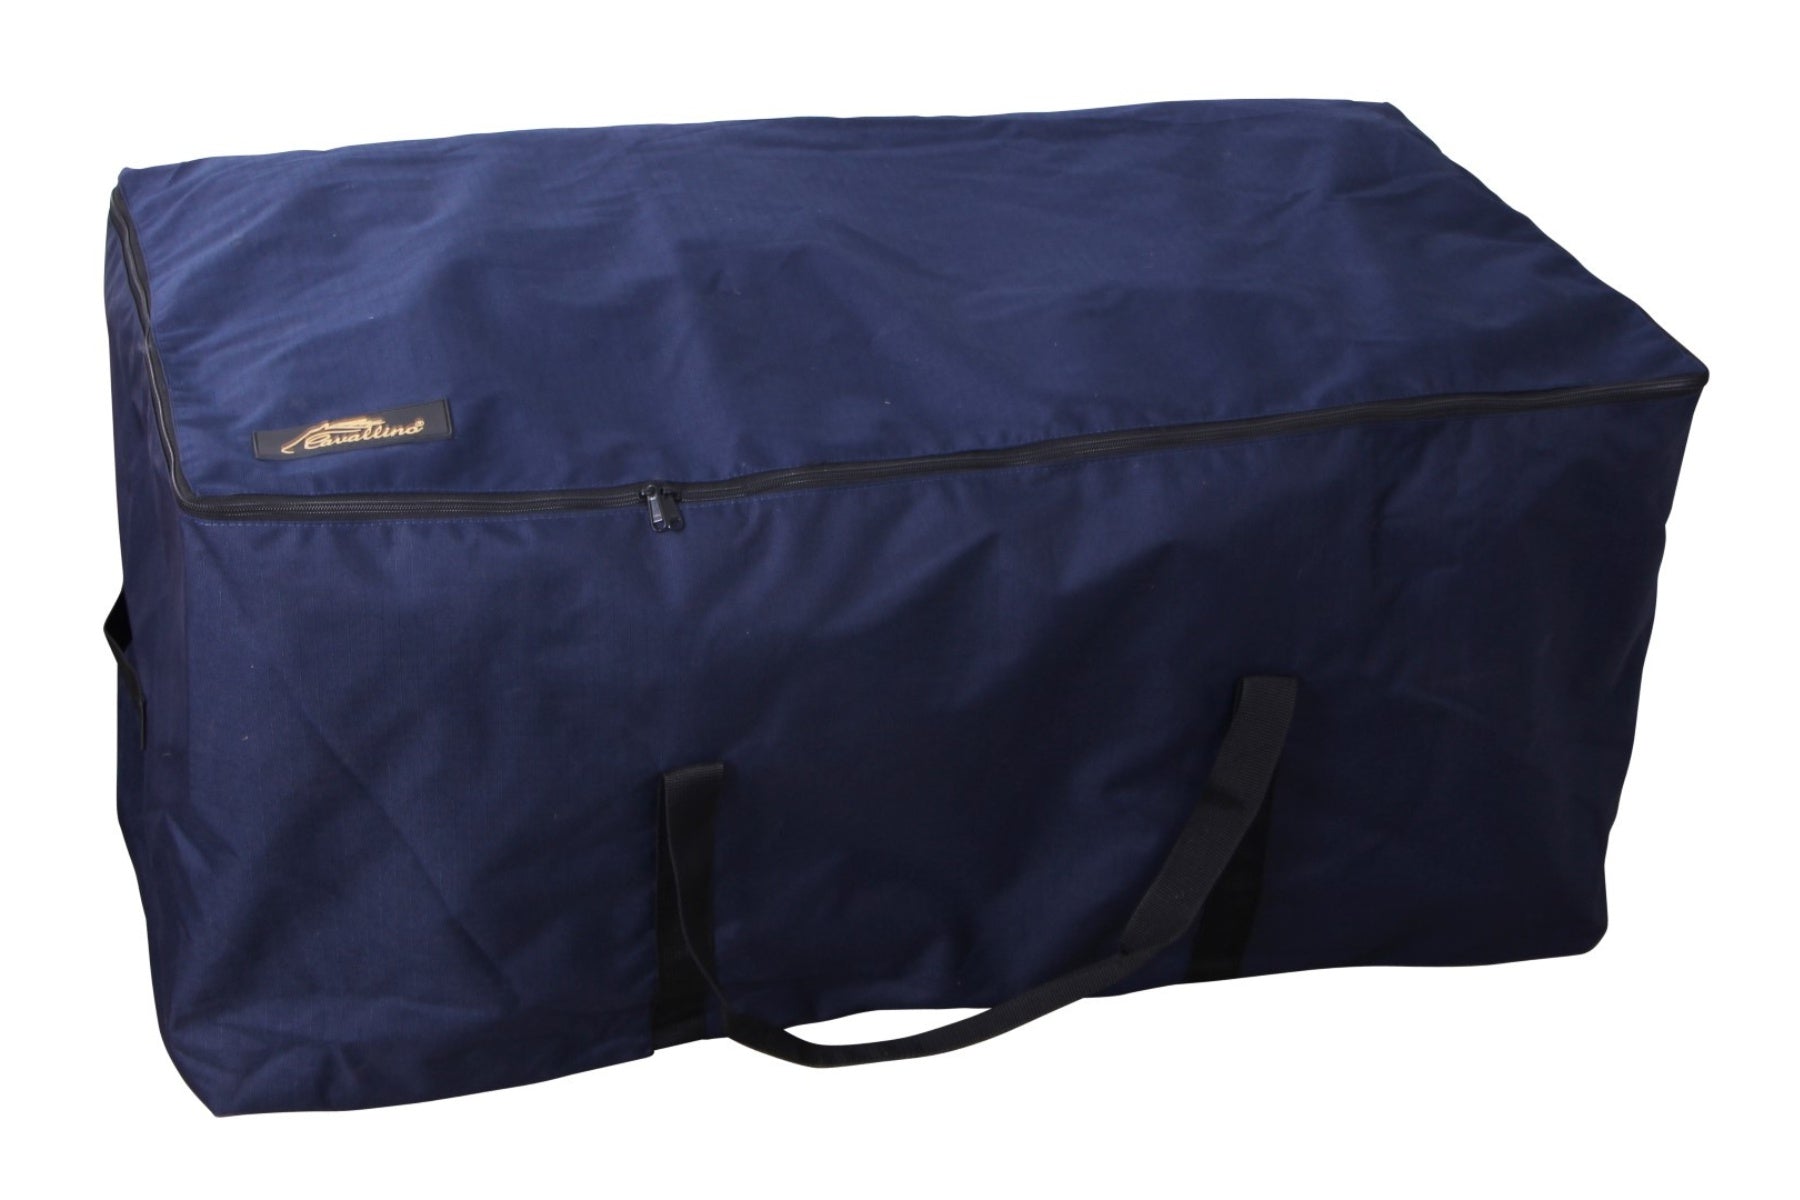 Cavallino Hay Bale Carry Bag 600D